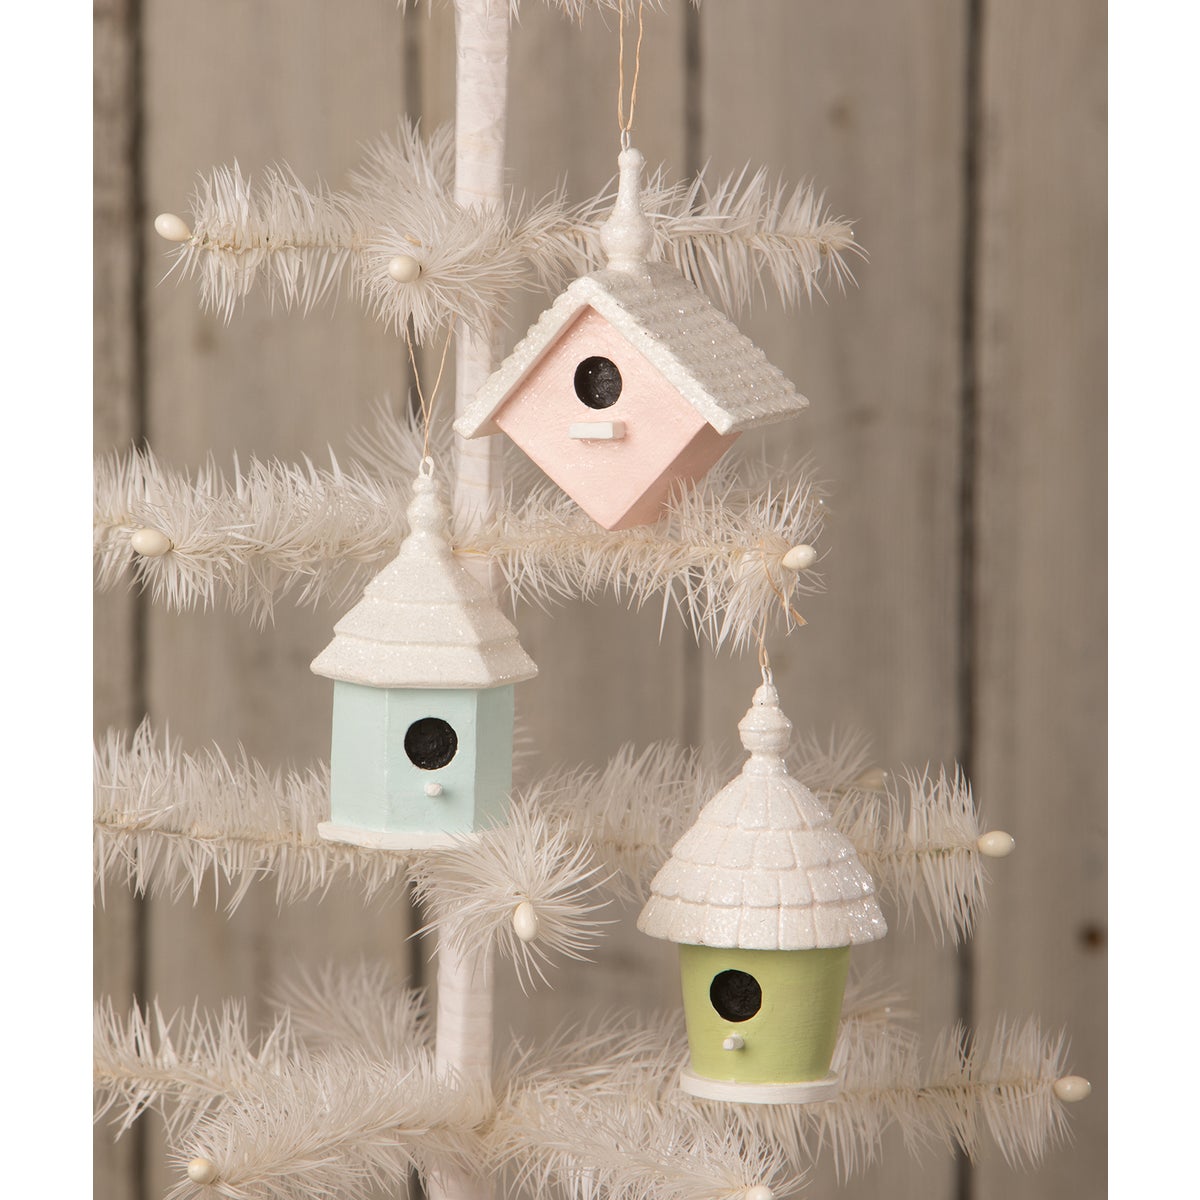 Pastel Bird House Ornaments